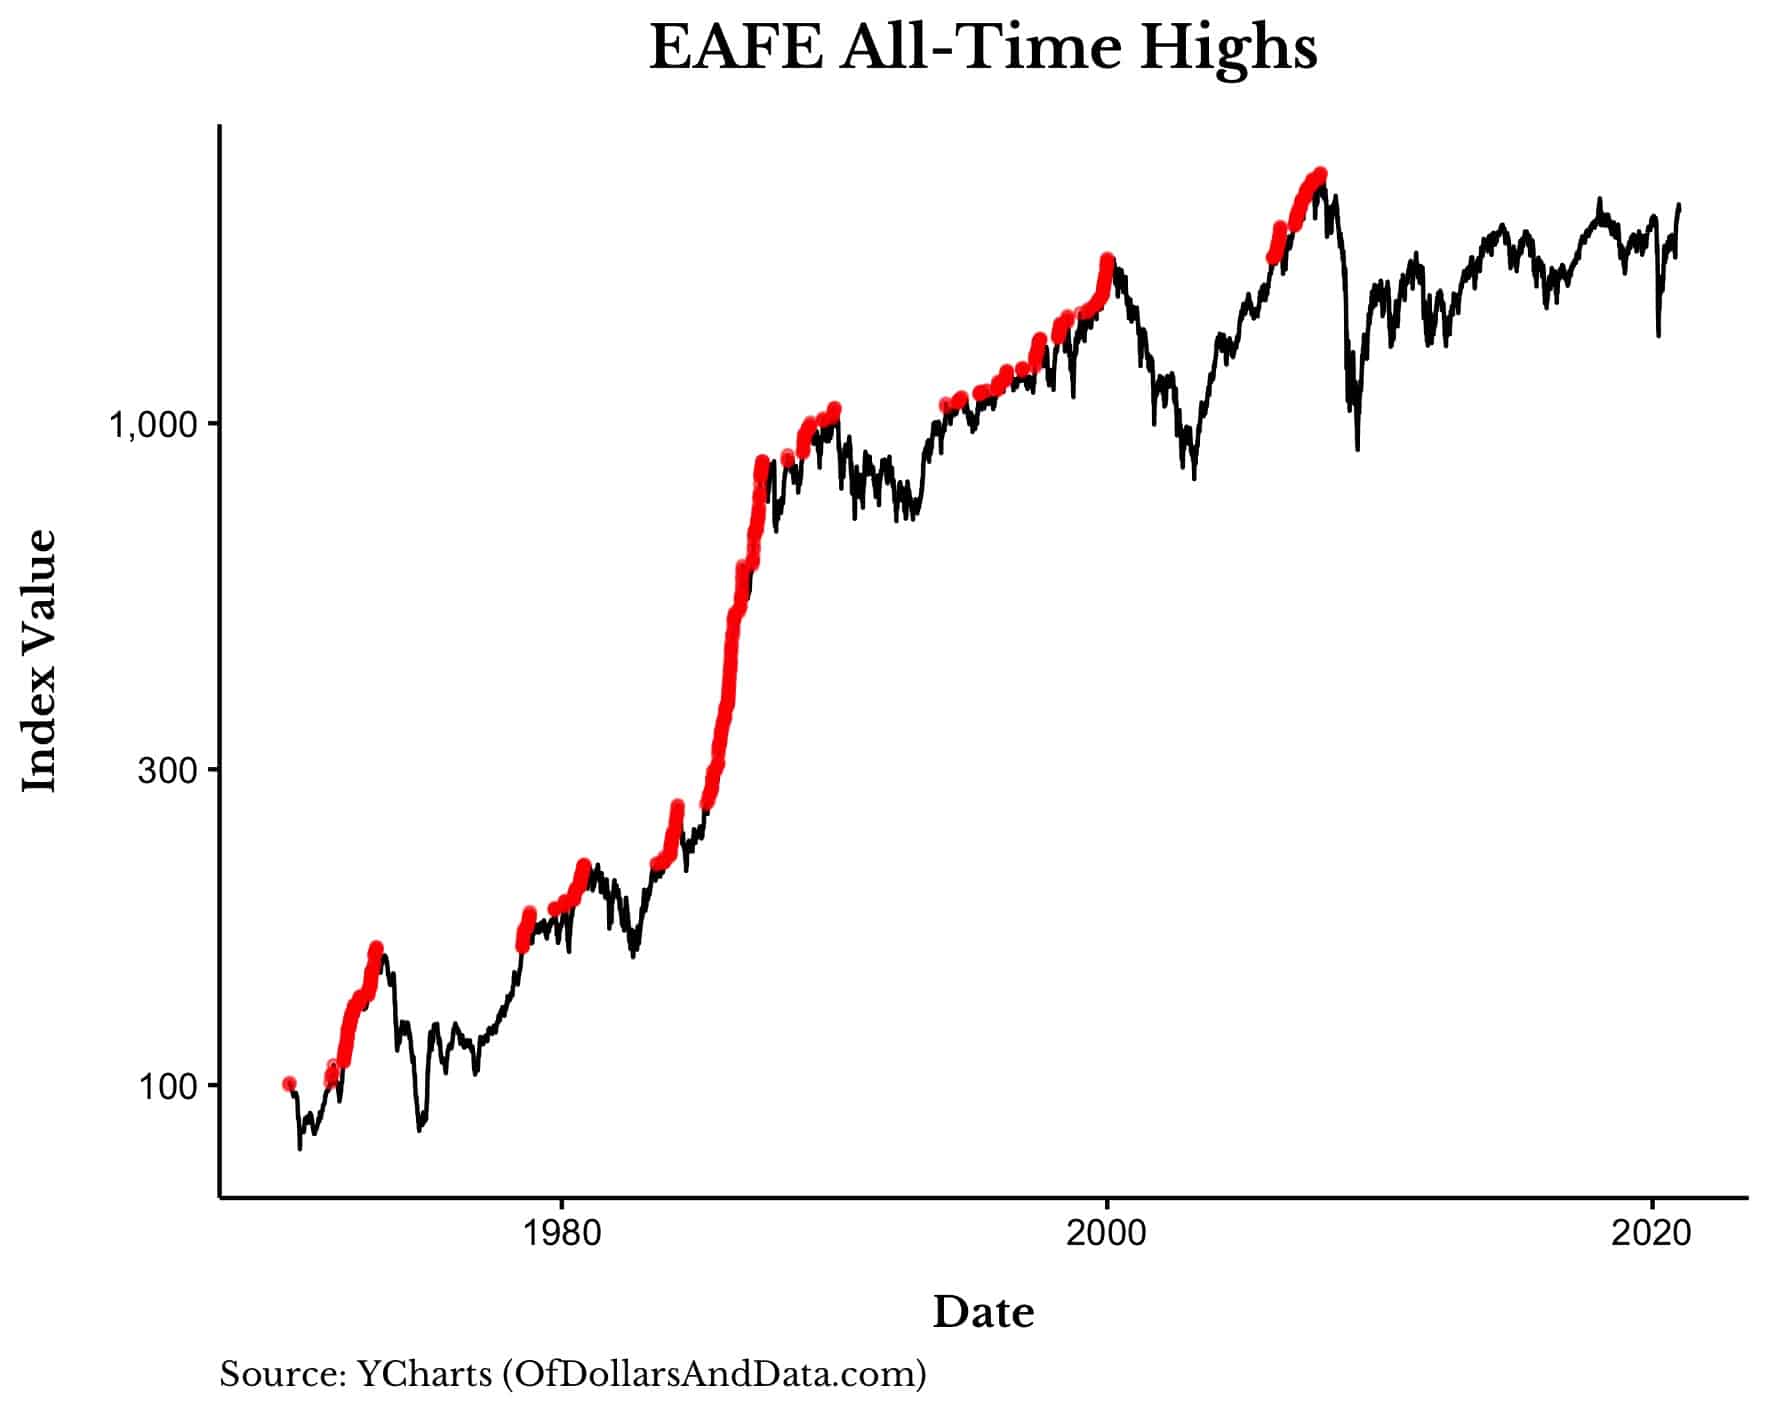 EAFE all-time highs